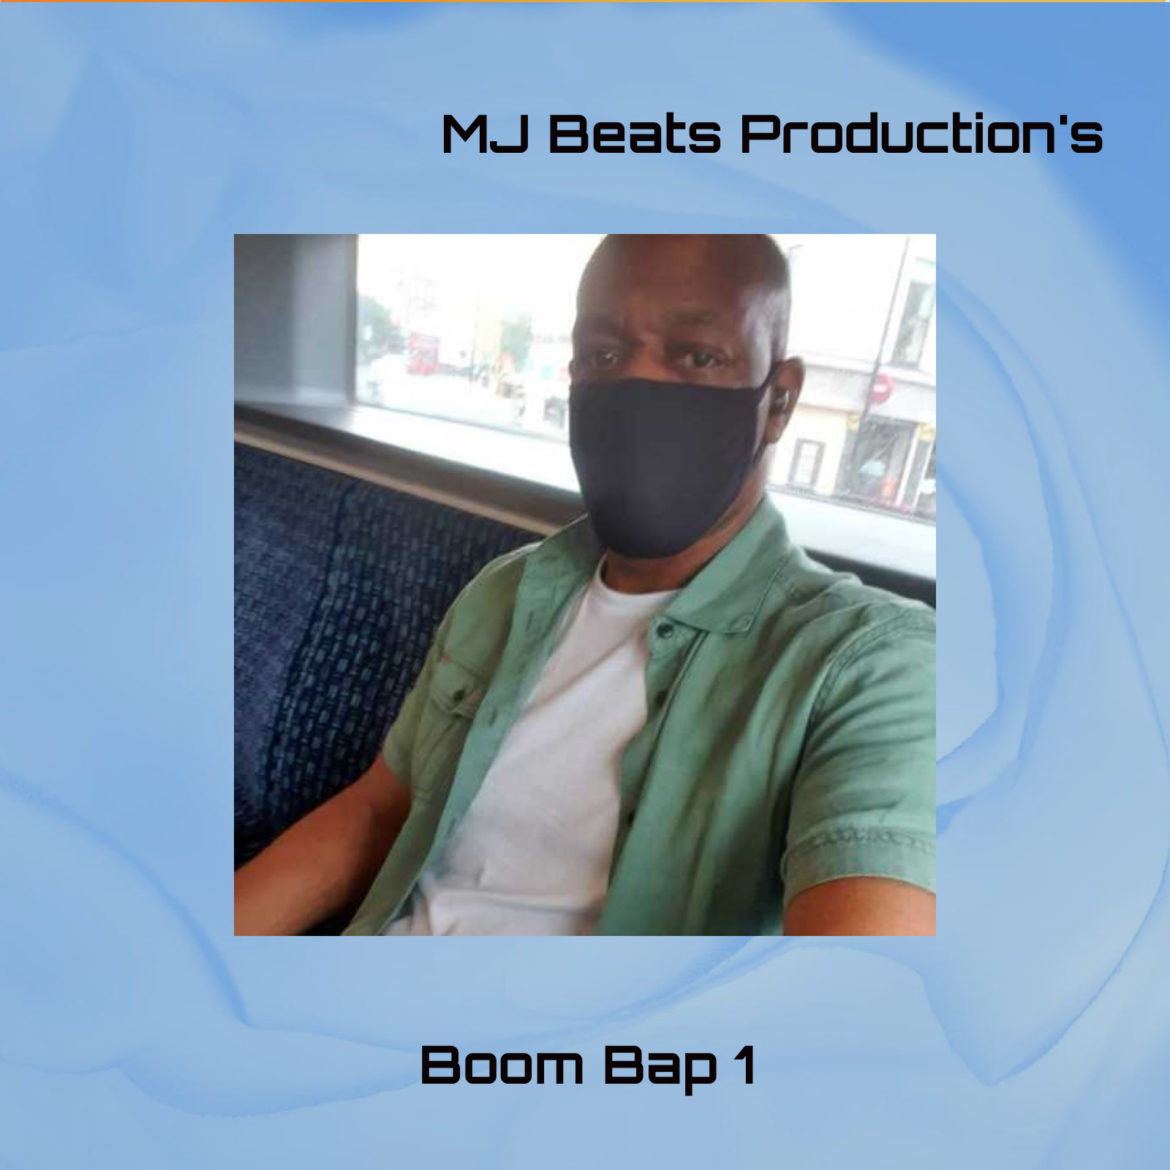 M J Beatsproductions’ Single ‘Boom Bap 1’ Aiming For NCIS